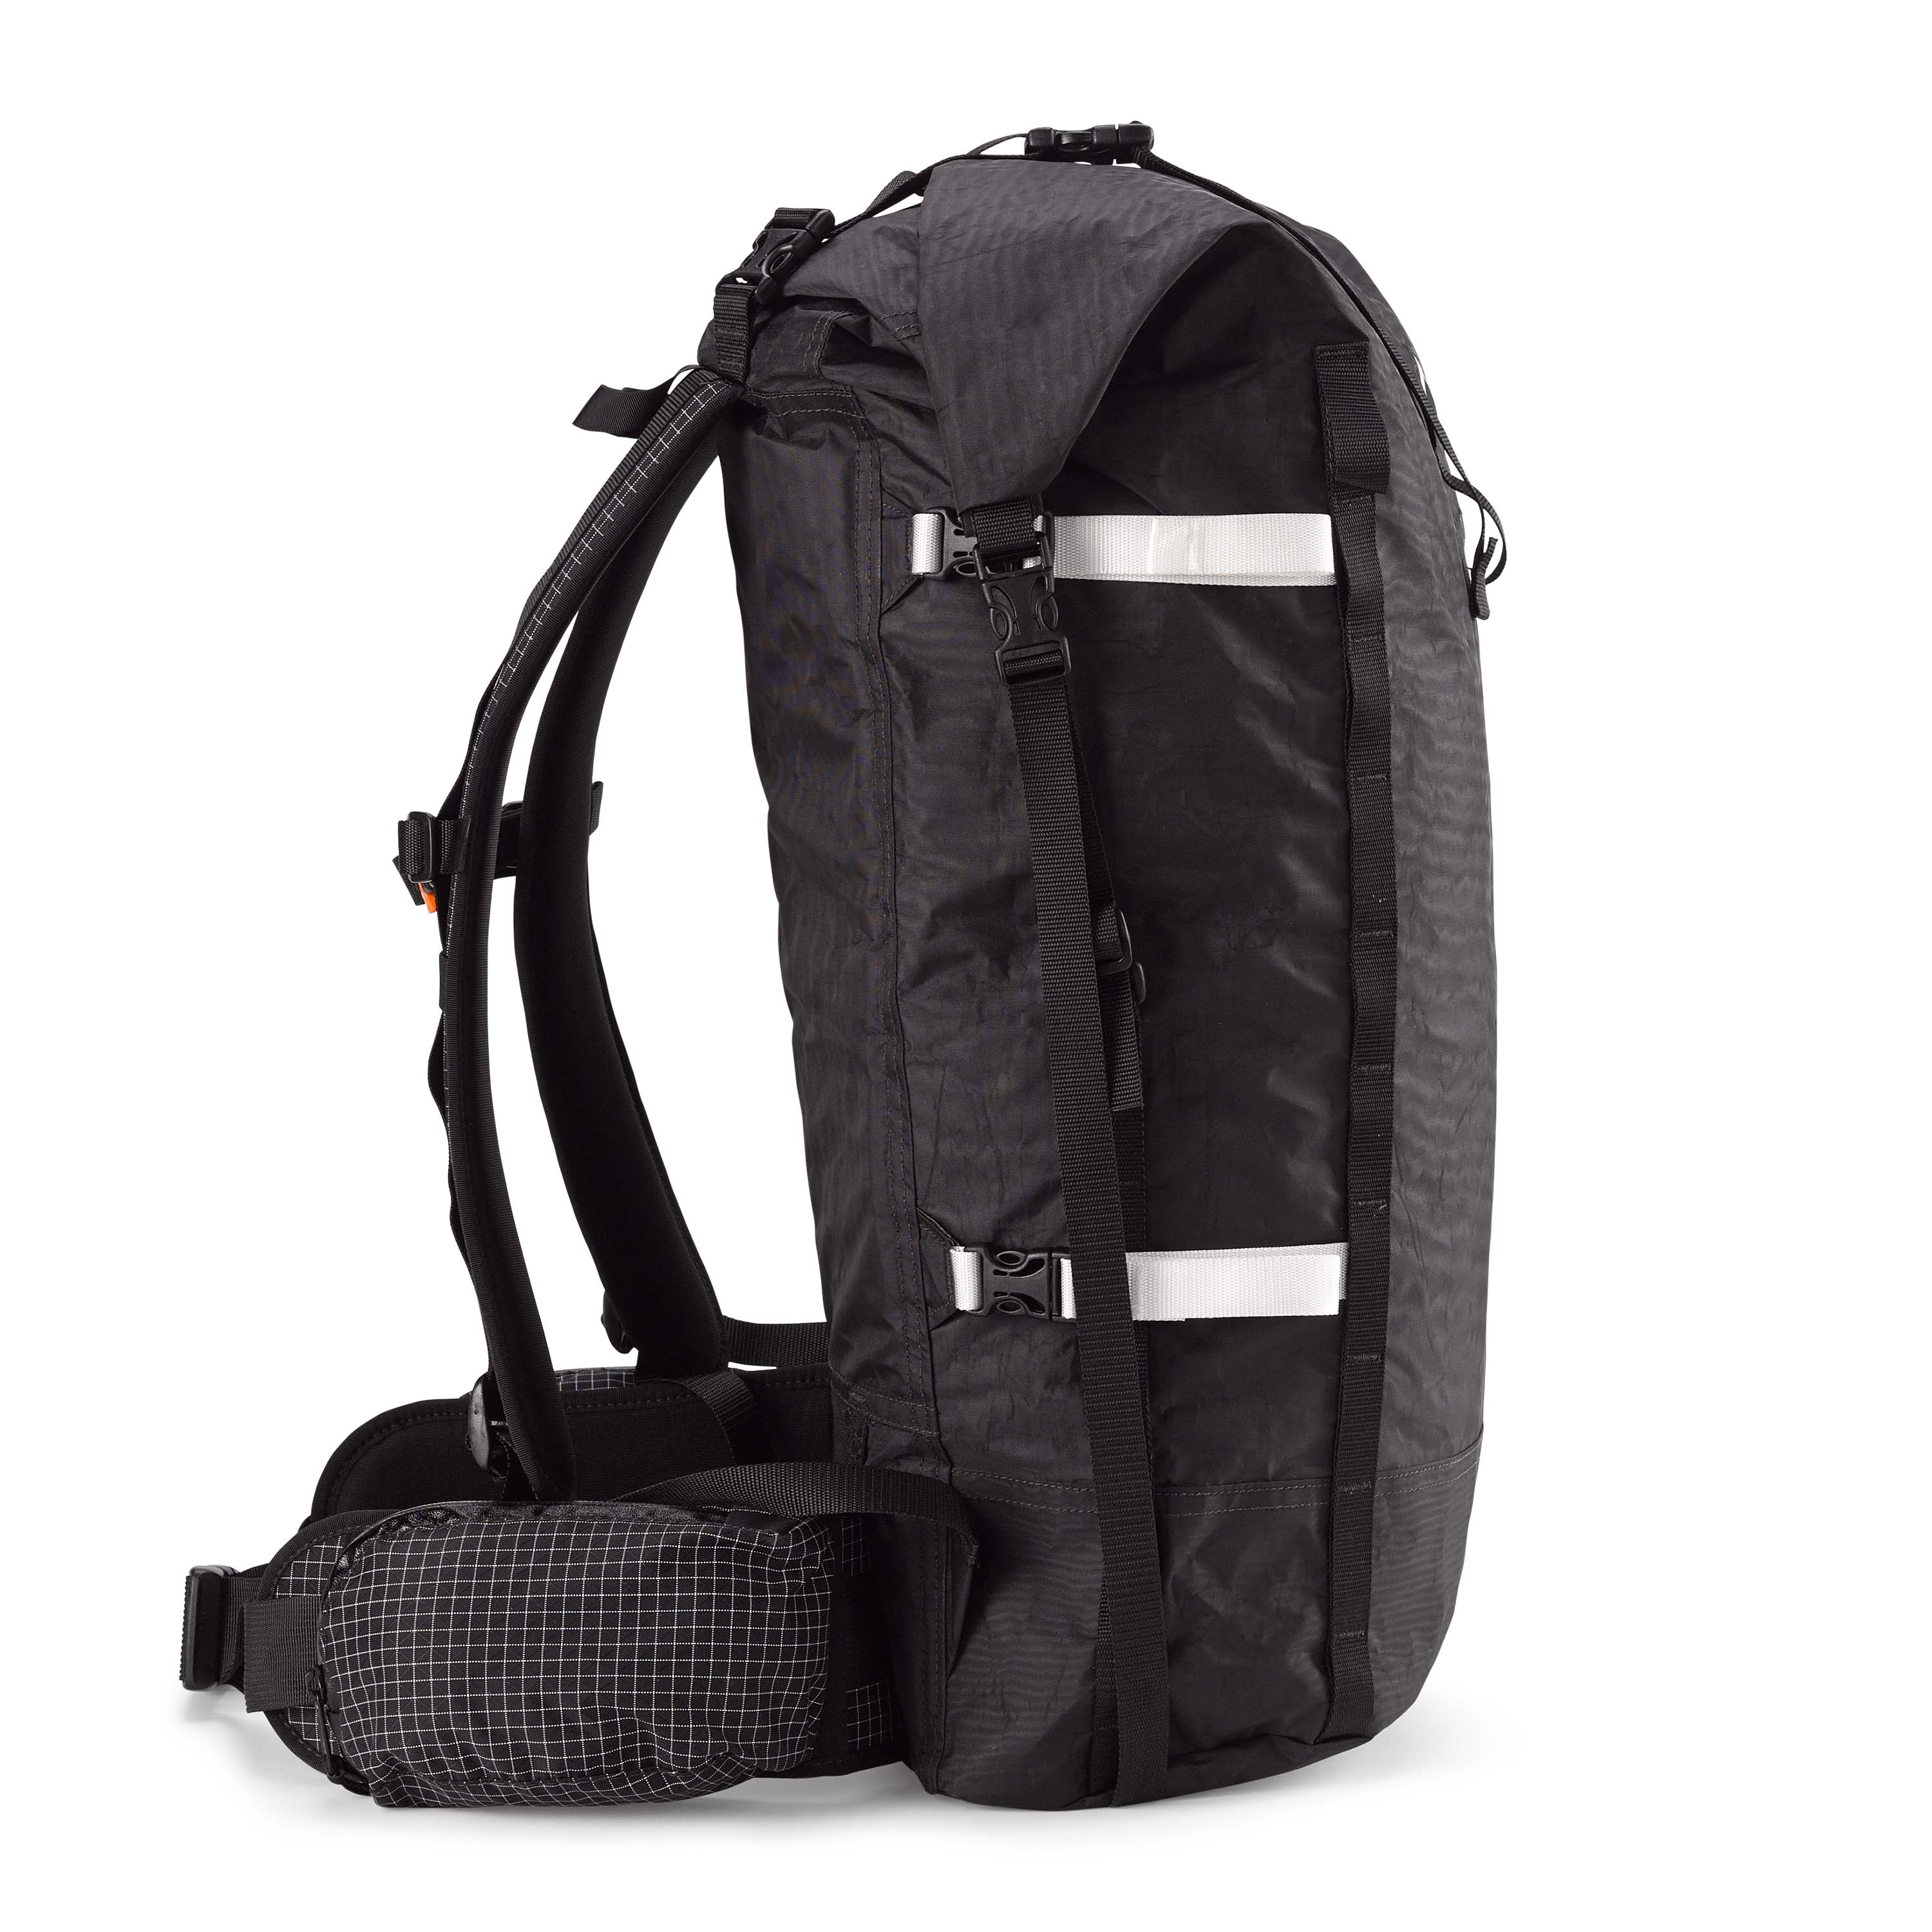 Hyperlite Mountain Gear 2400 Porter 40L Ultralight Backpack